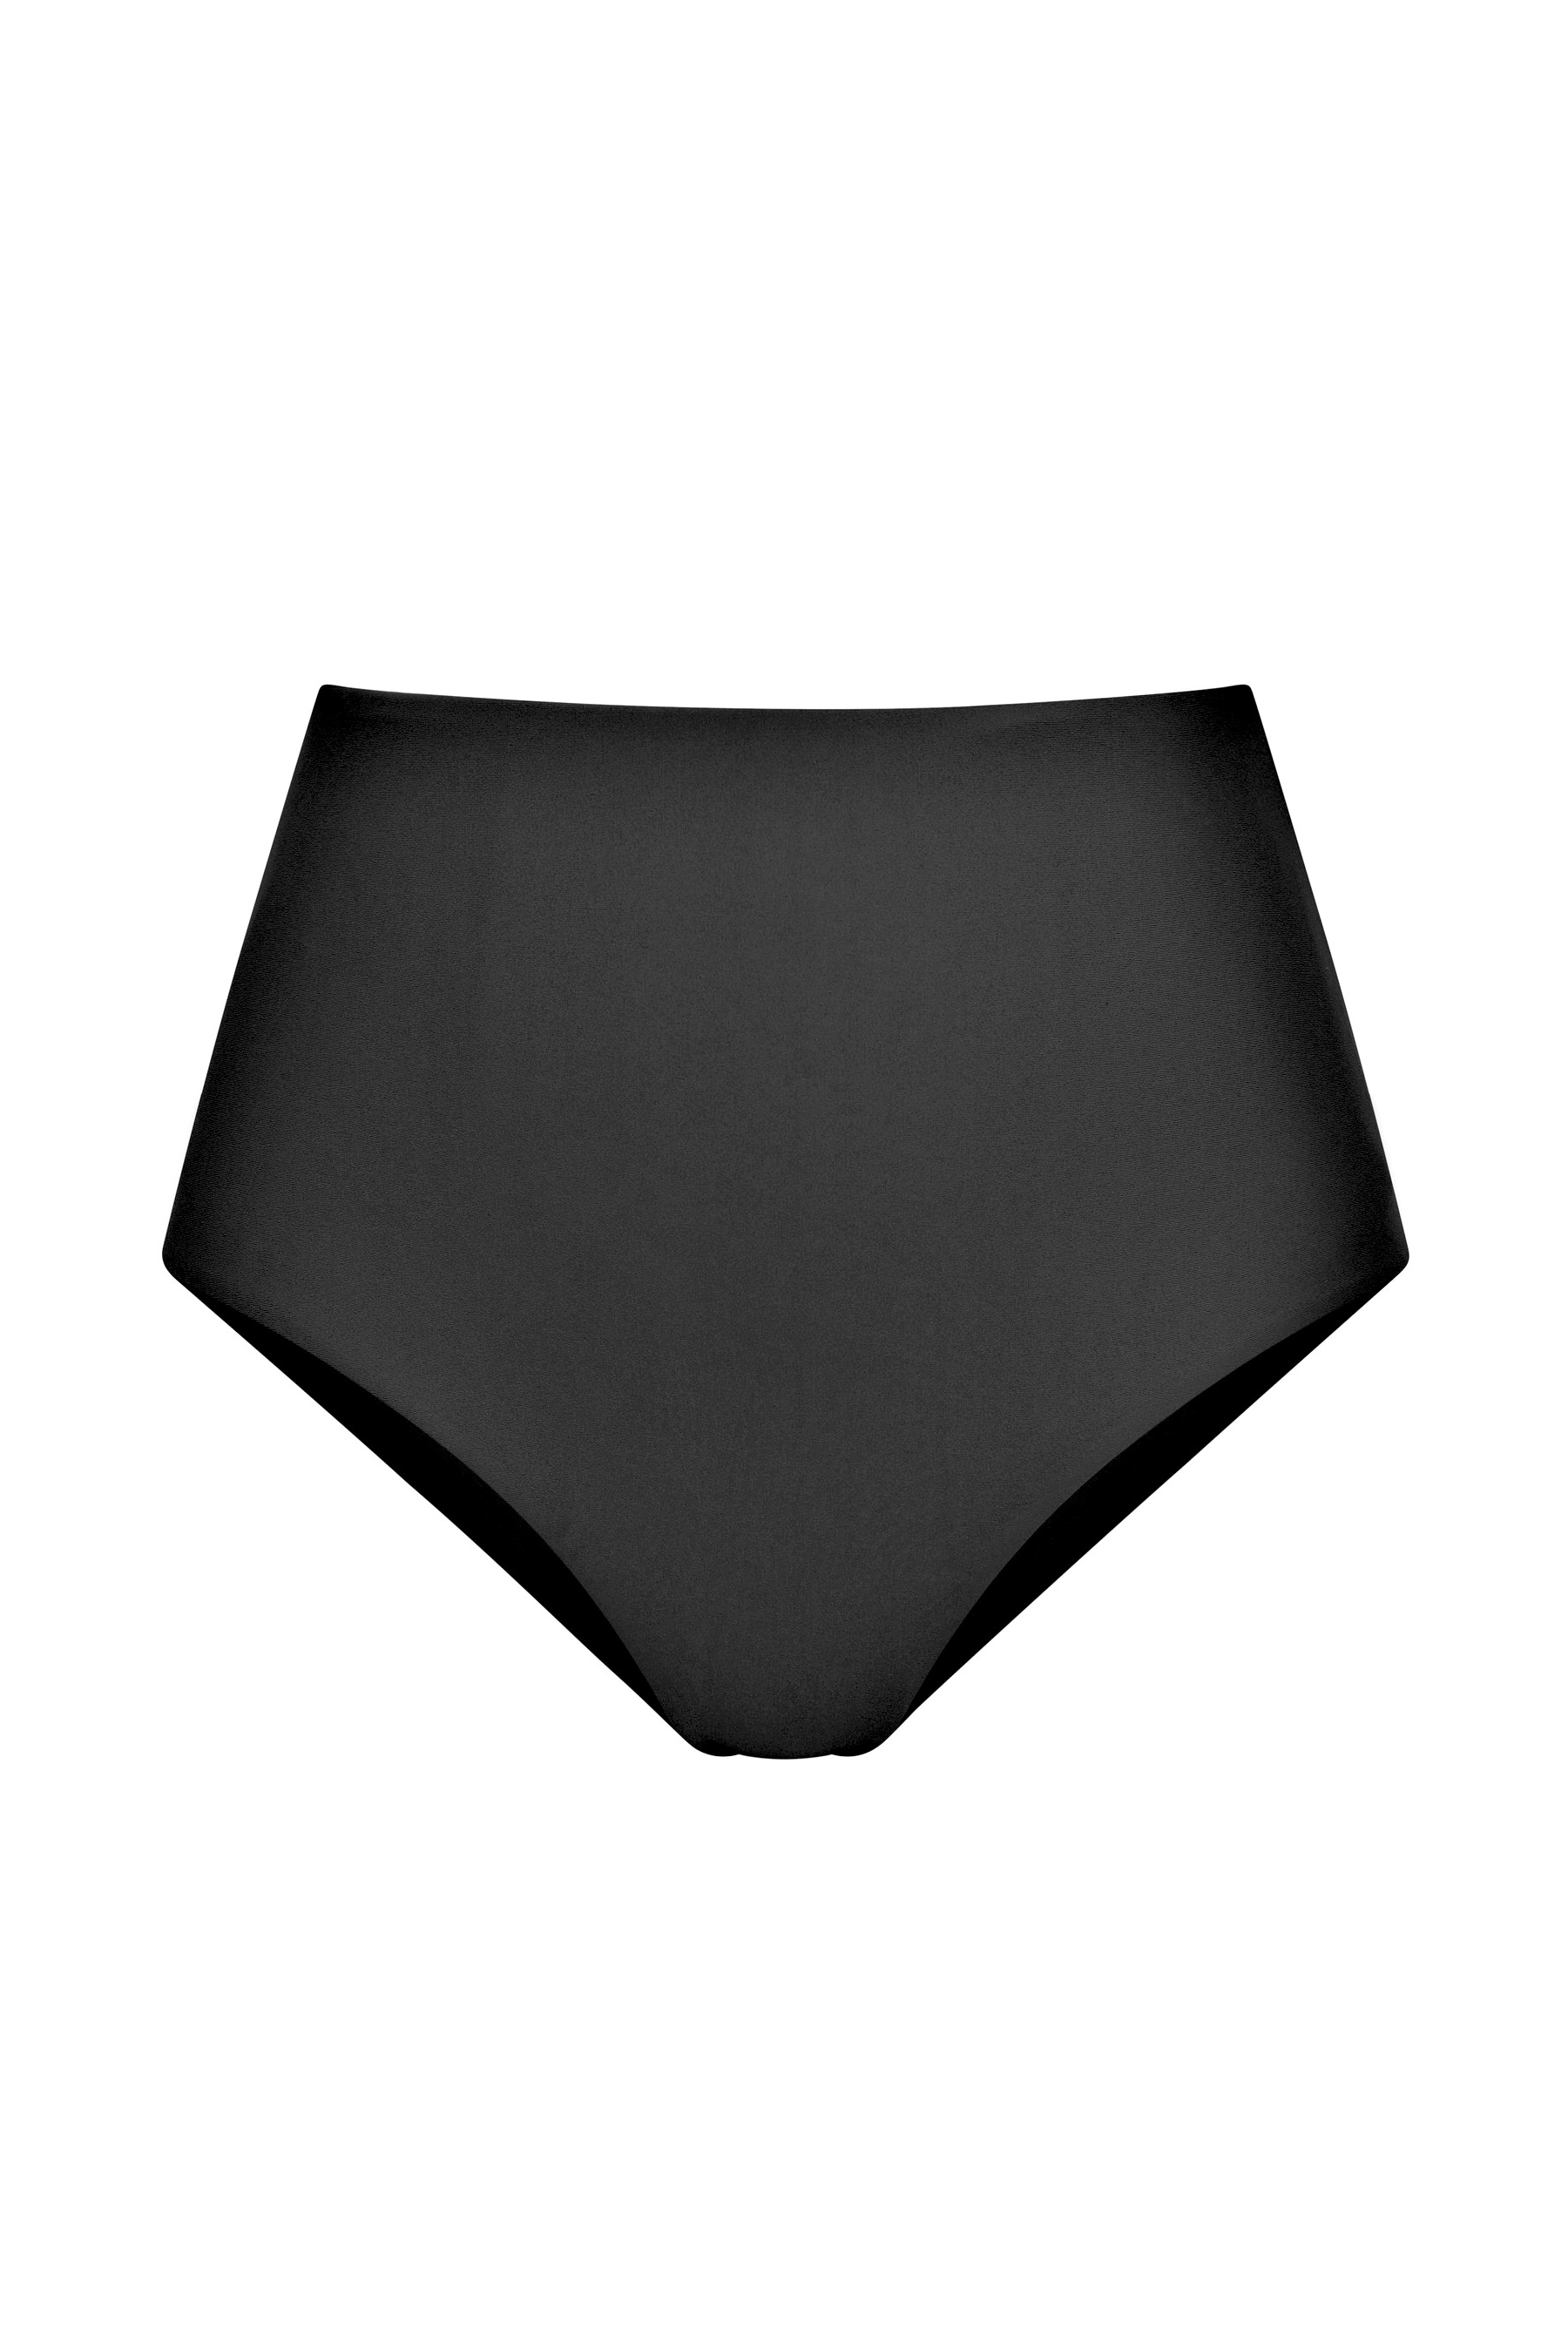 Bay 2 Swimwear Swimwear Hanabea Bottom - Black